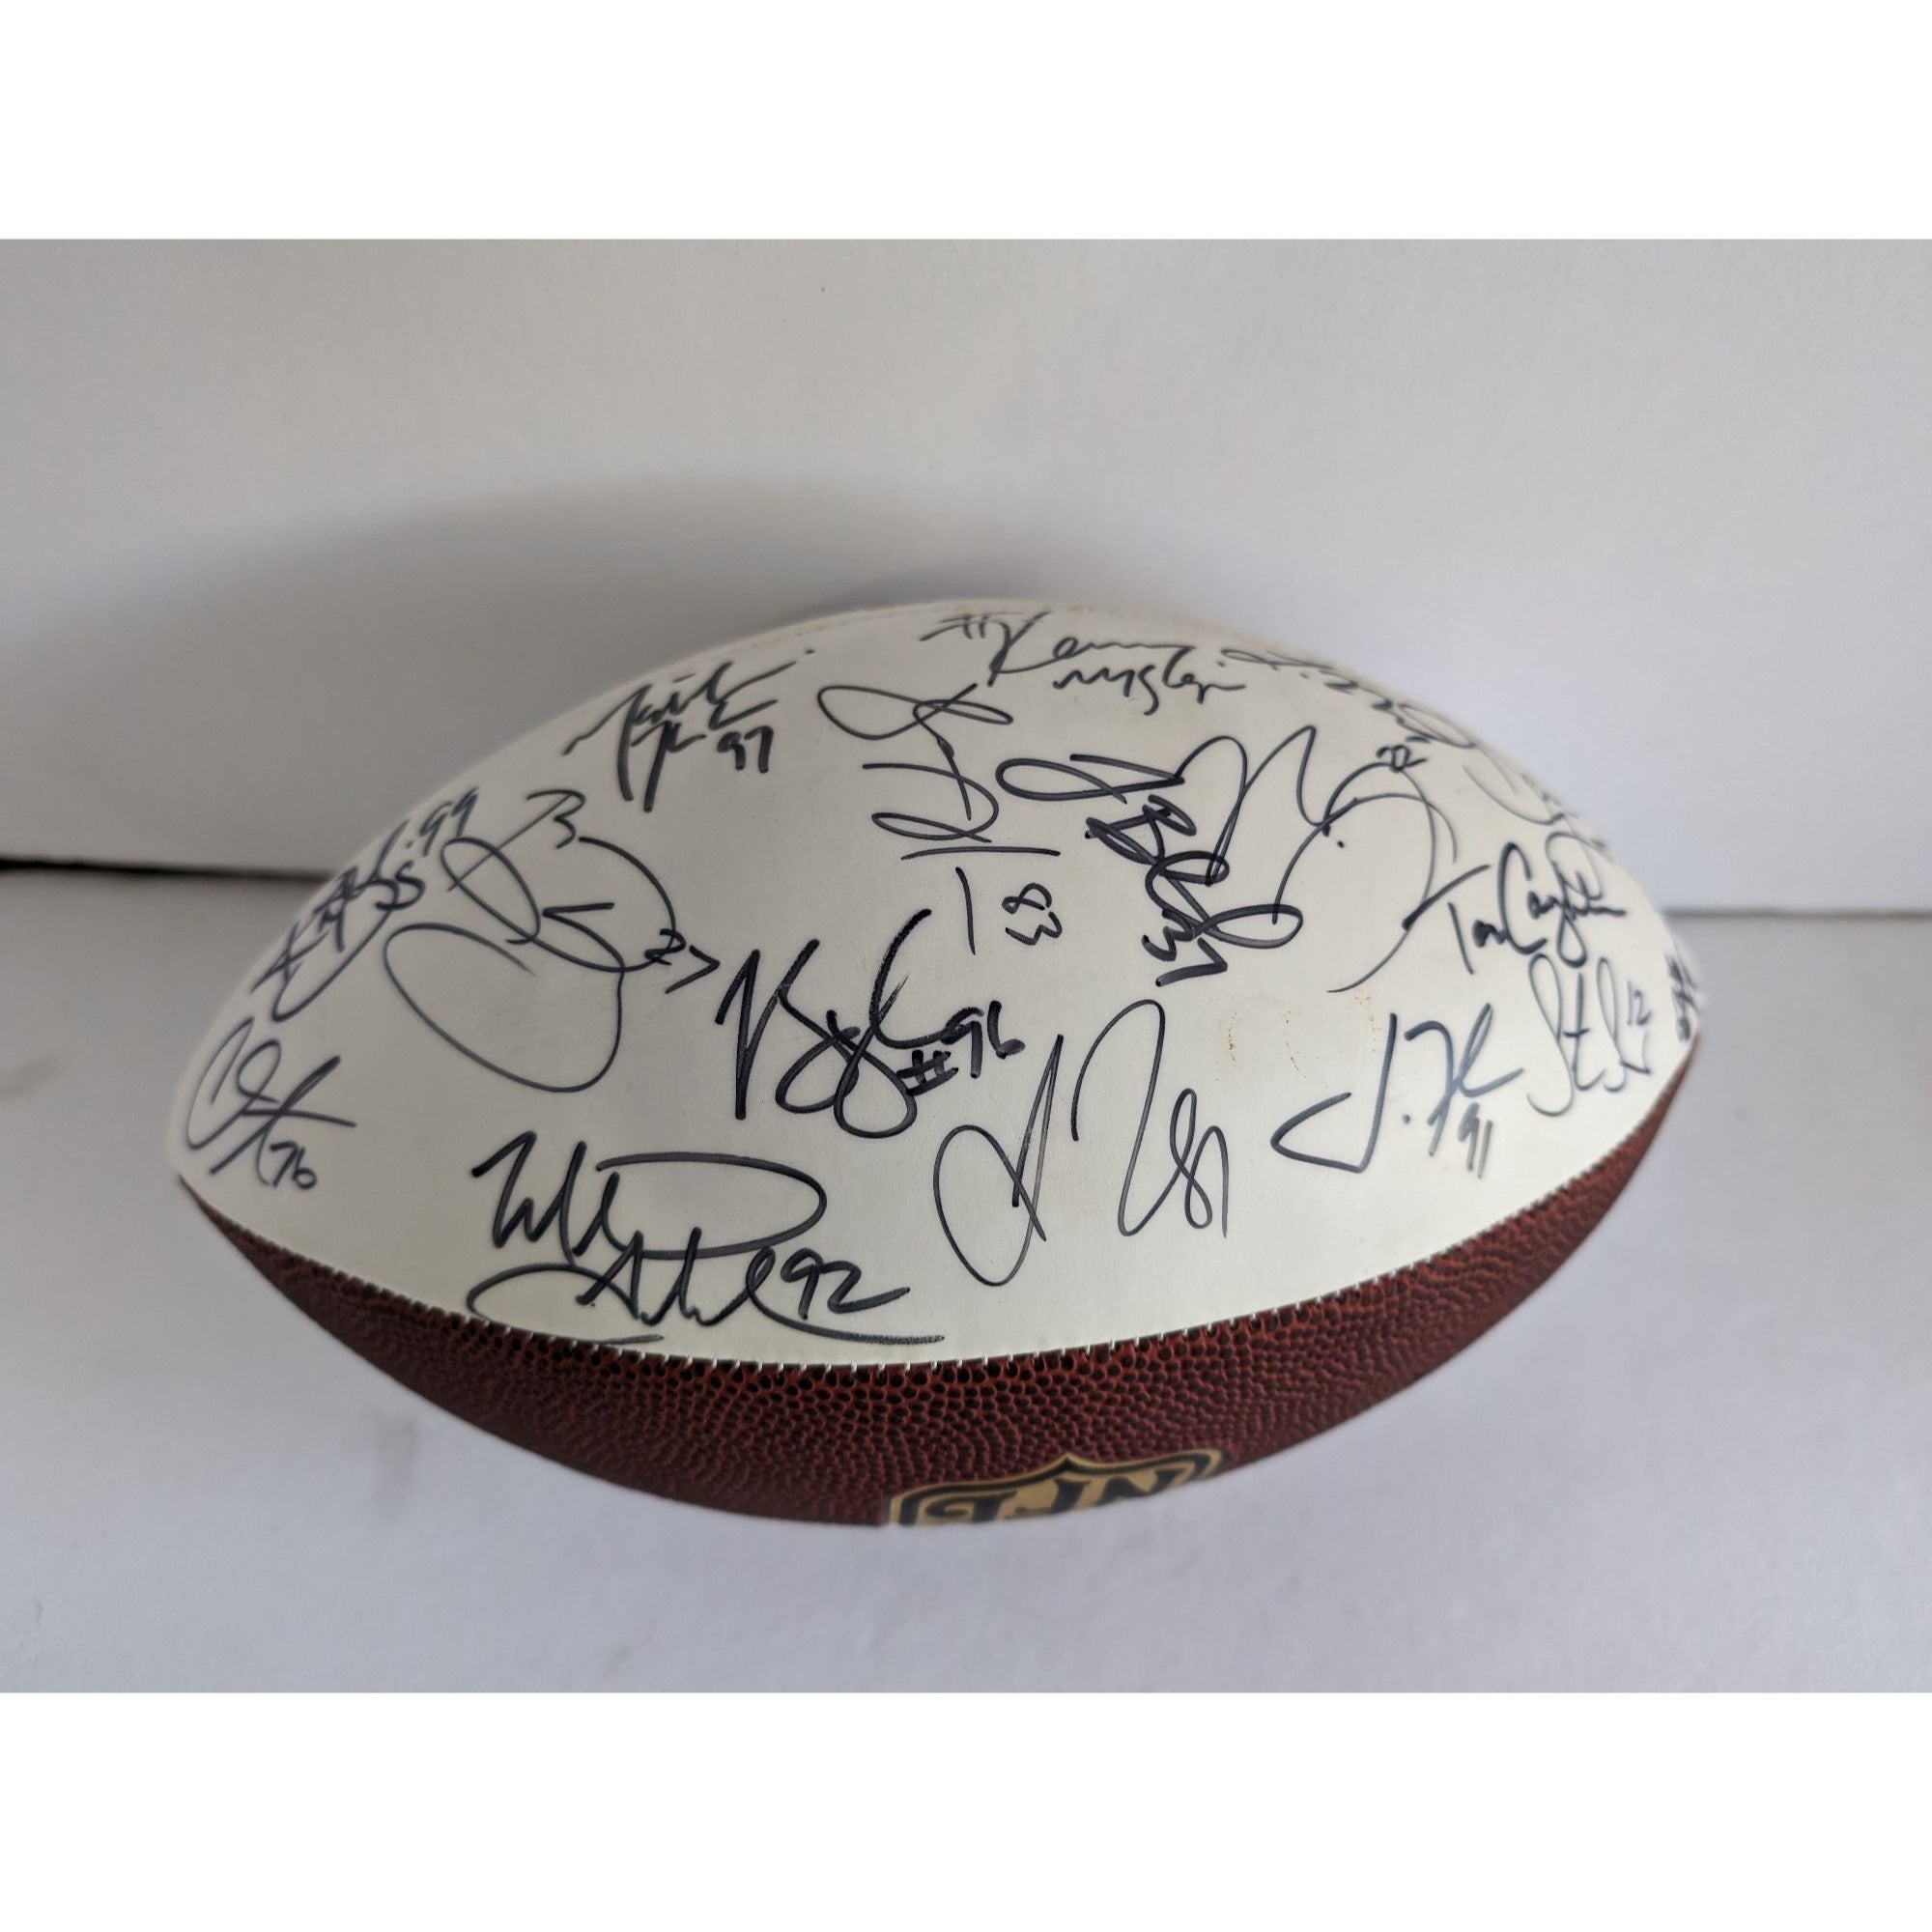 New York Giants Eli Manning Super Bowl champions team signed football